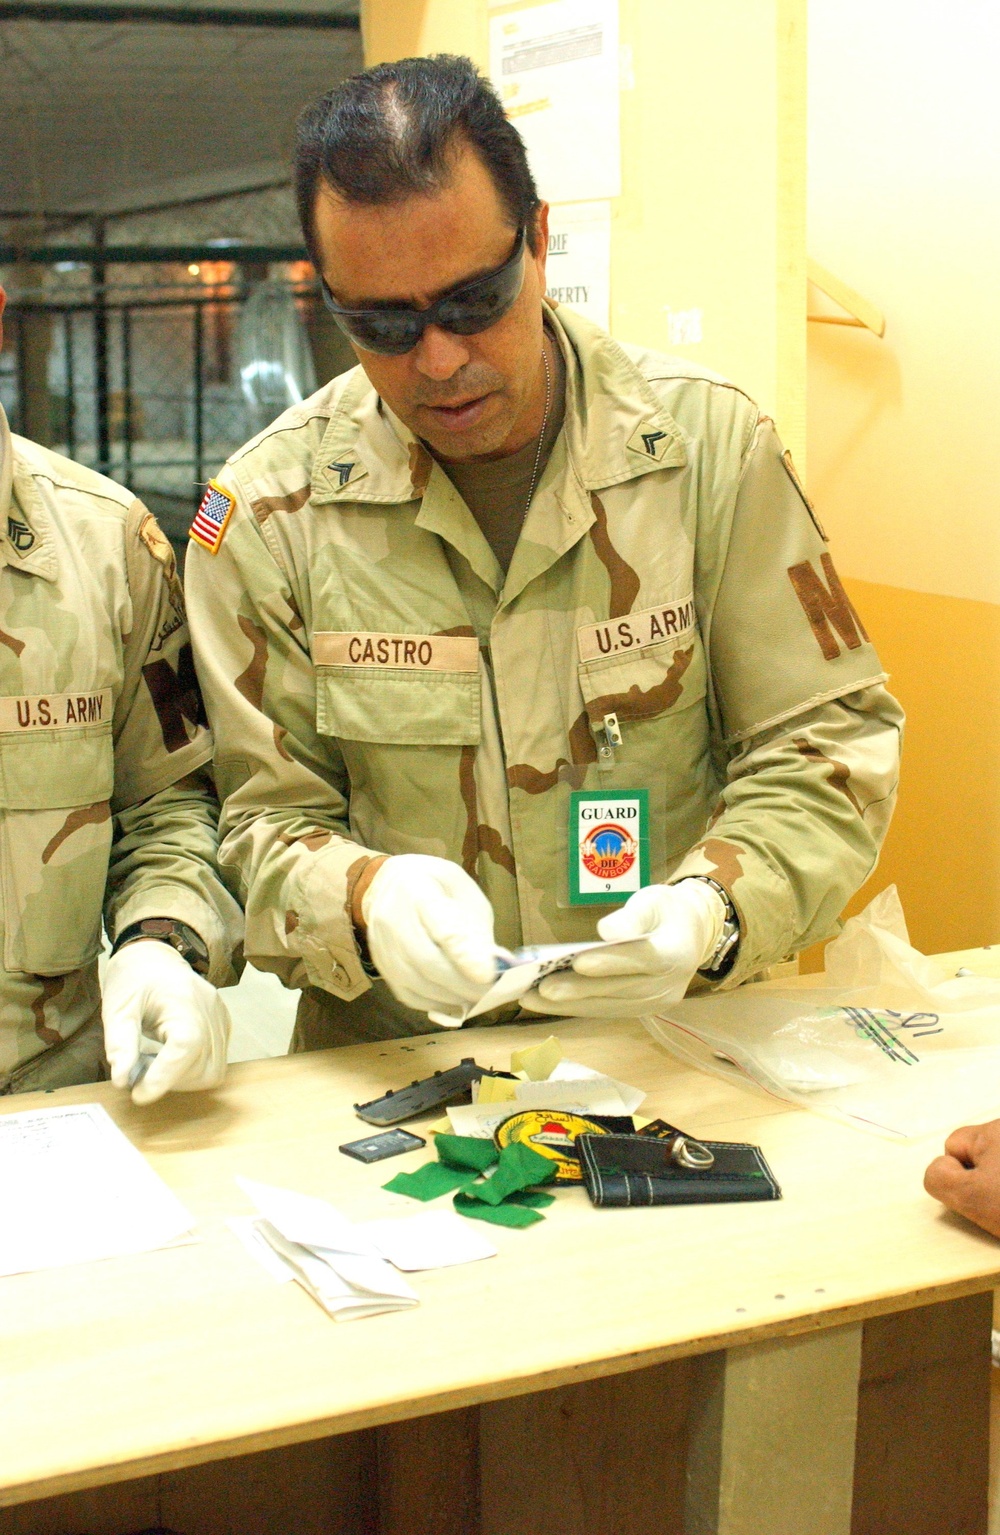 SGT Castro checks a prisoners belongings